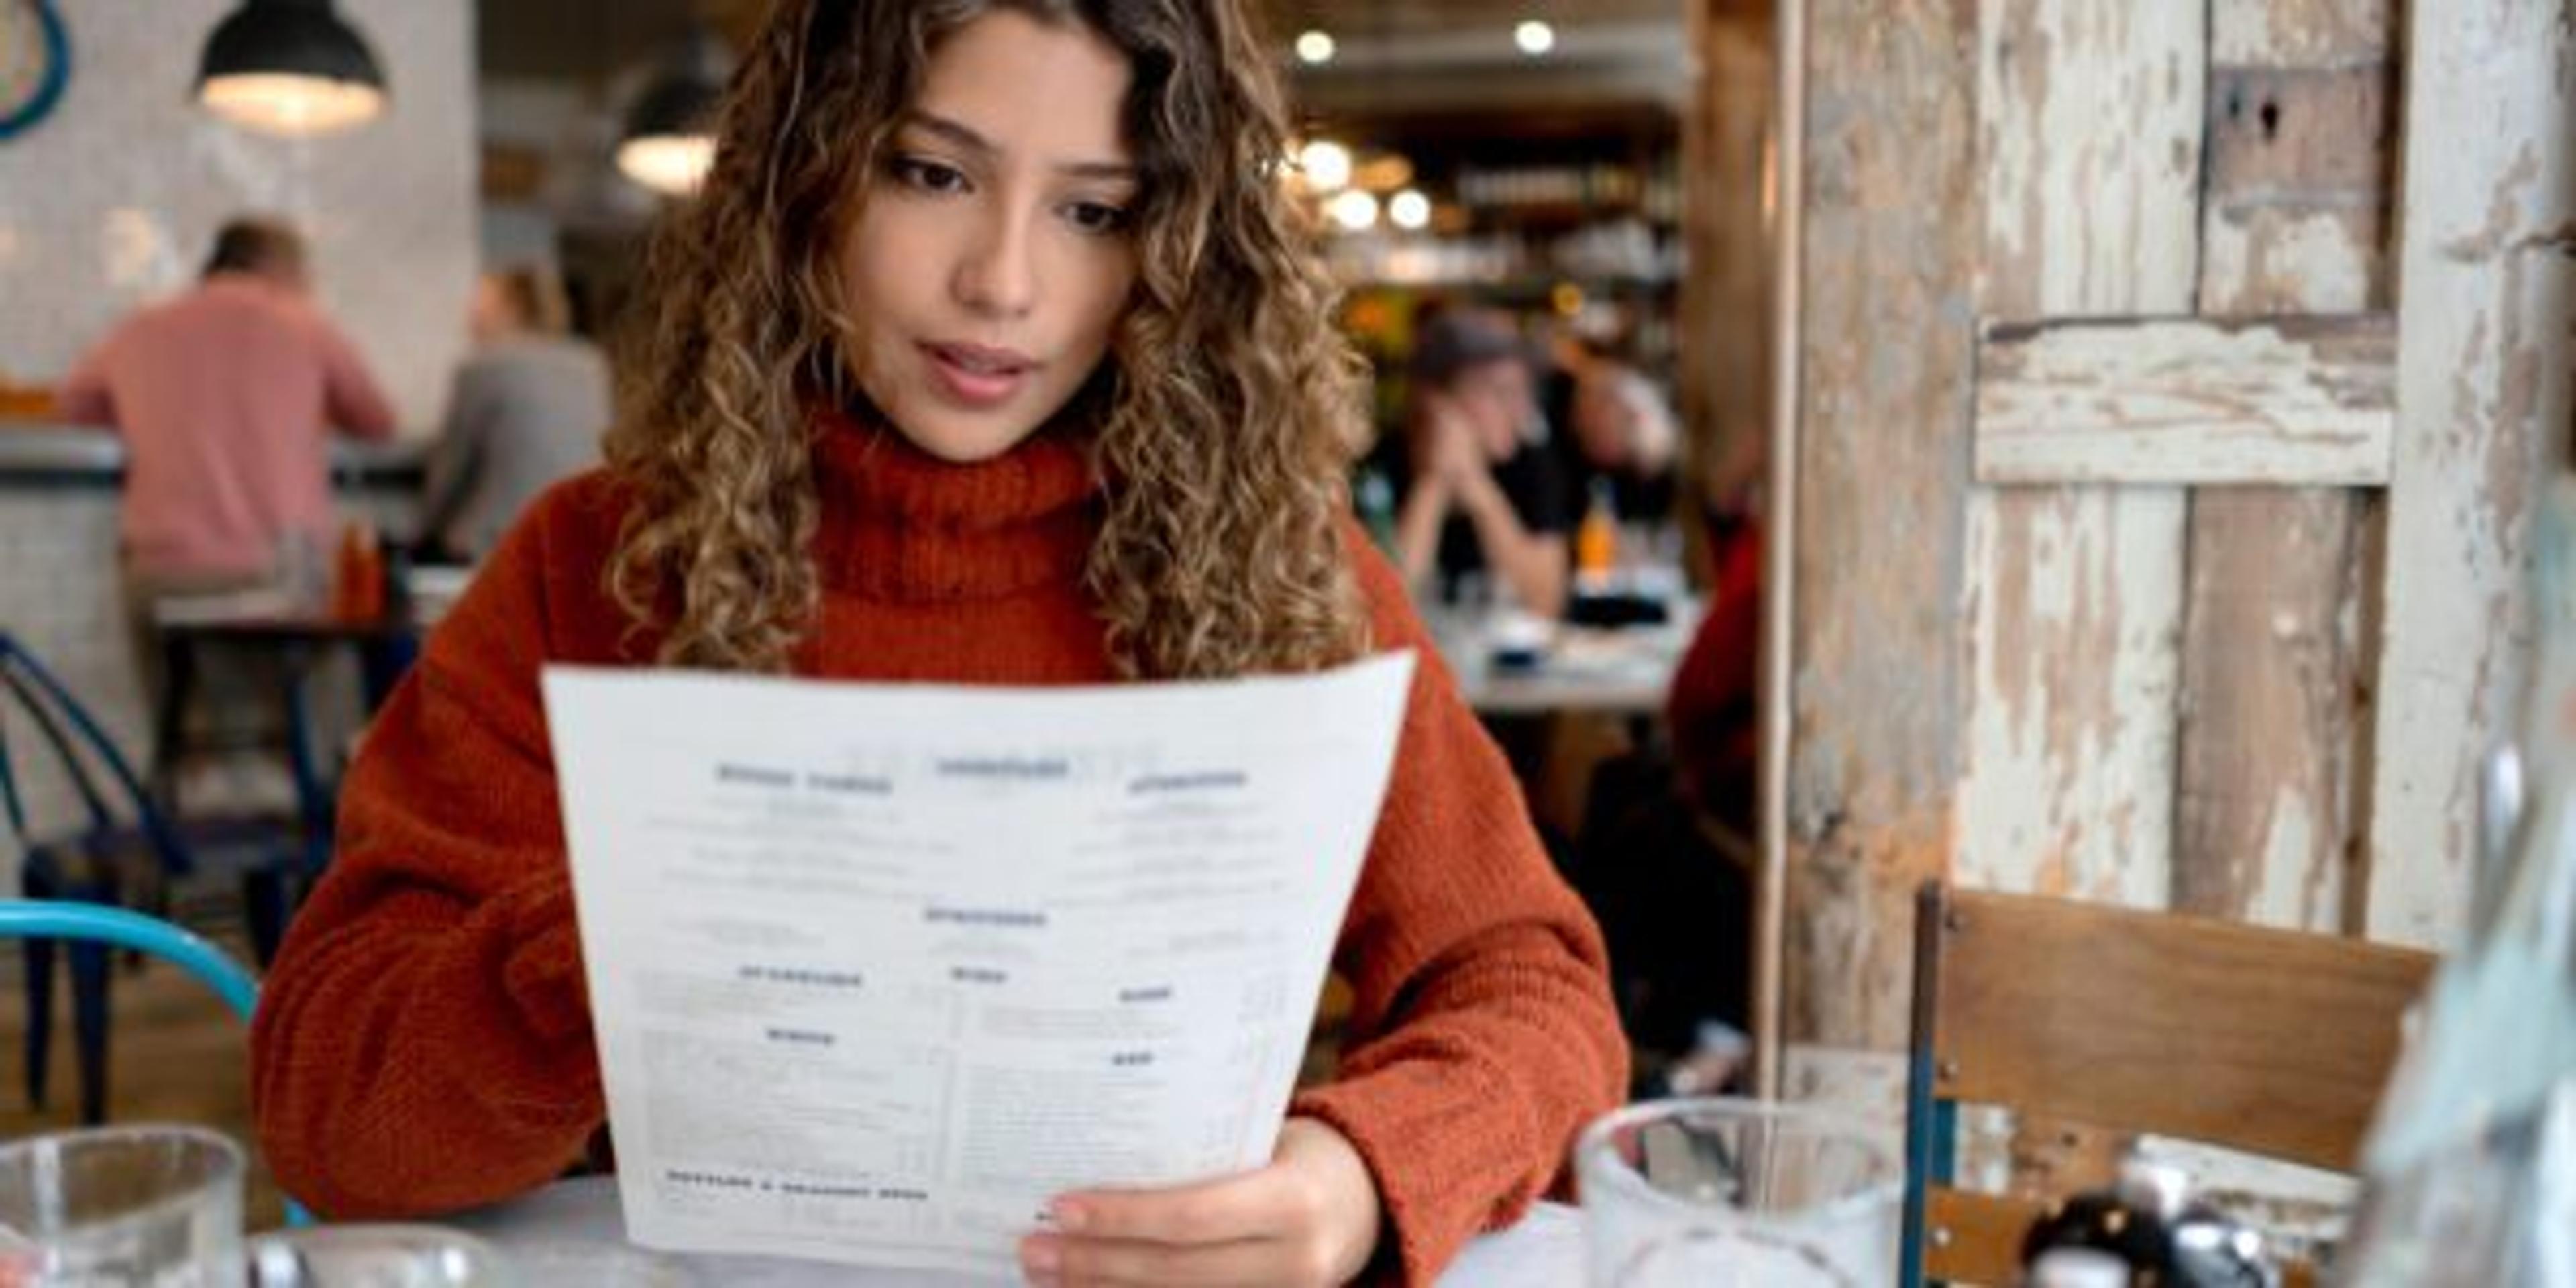 Woman at a restaurant reading the menu